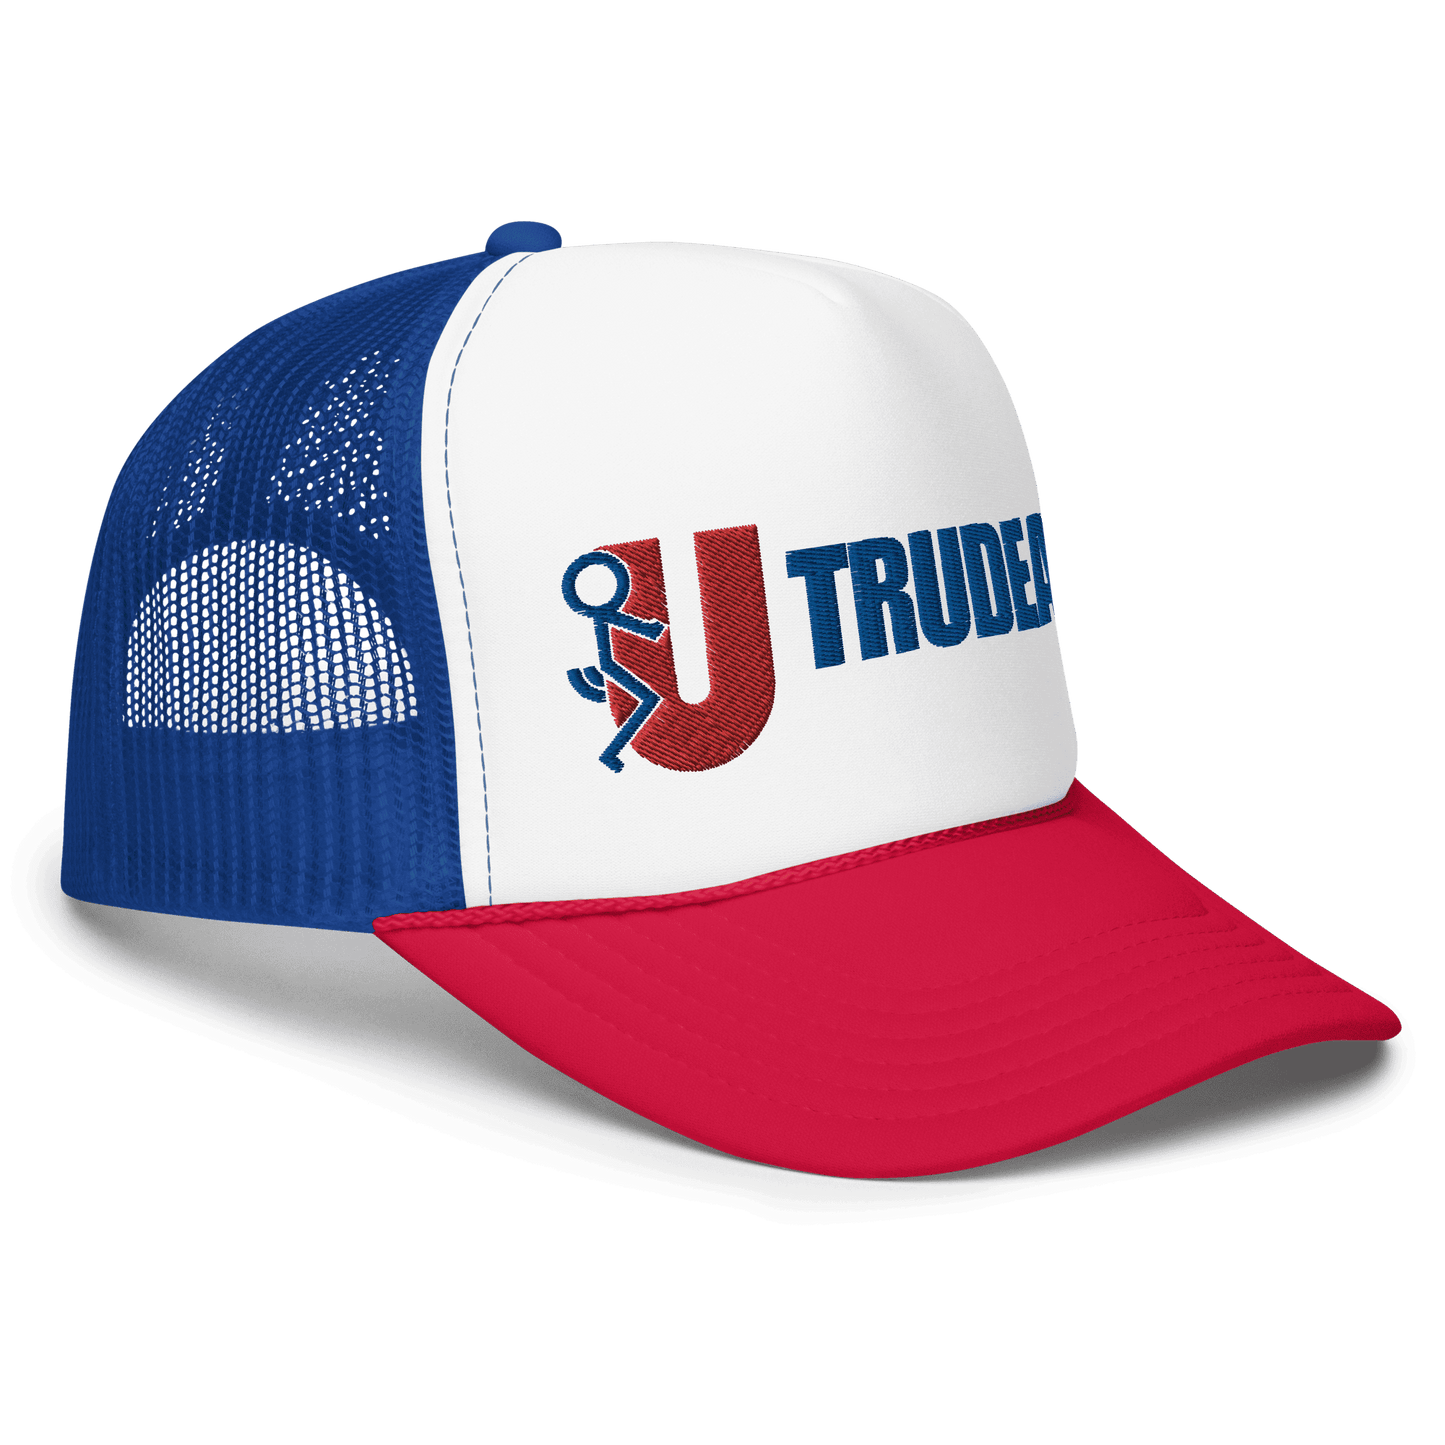 Anti-Trudeau Foam Trucker Hat